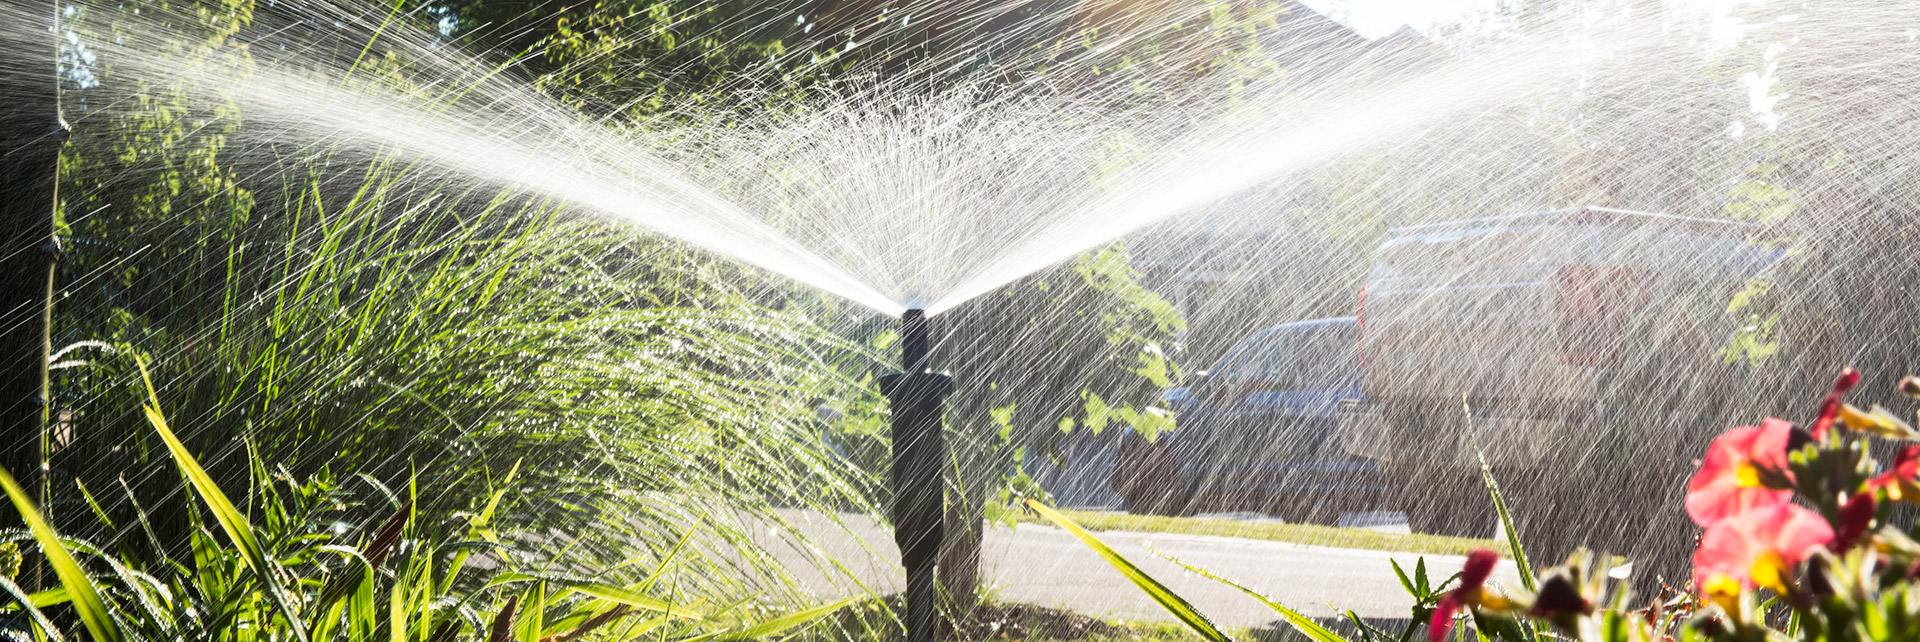 lawn sprinkler system design and installation in toronto